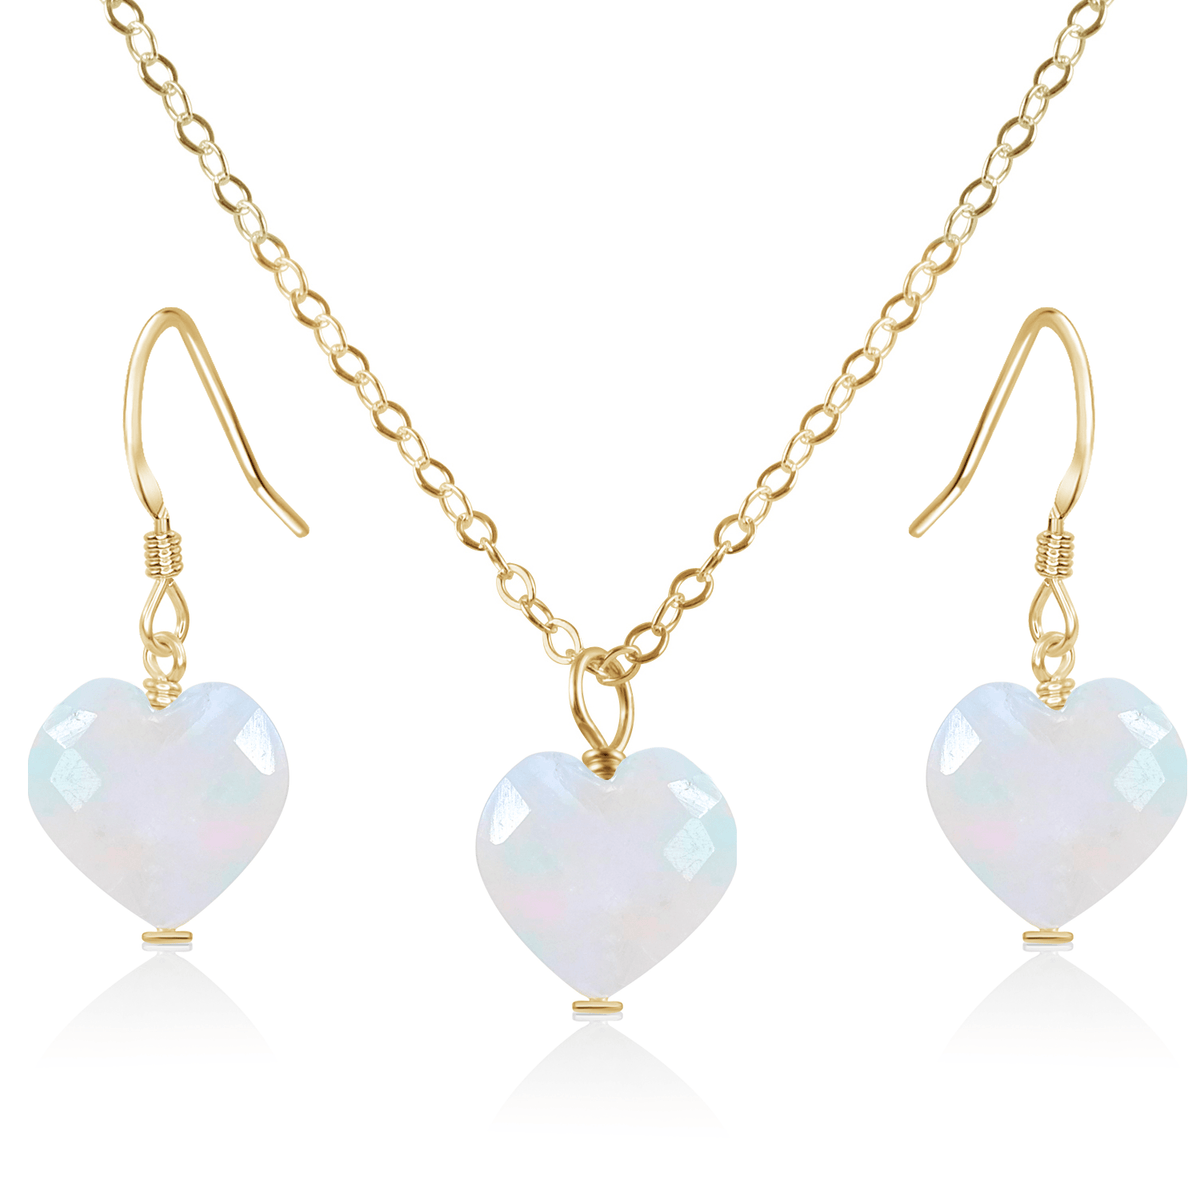 Rainbow Moonstone Crystal Heart Jewellery Set - Rainbow Moonstone Crystal Heart Jewellery Set - 14k Gold Fill / Cable / Necklace & Earrings - Luna Tide Handmade Crystal Jewellery